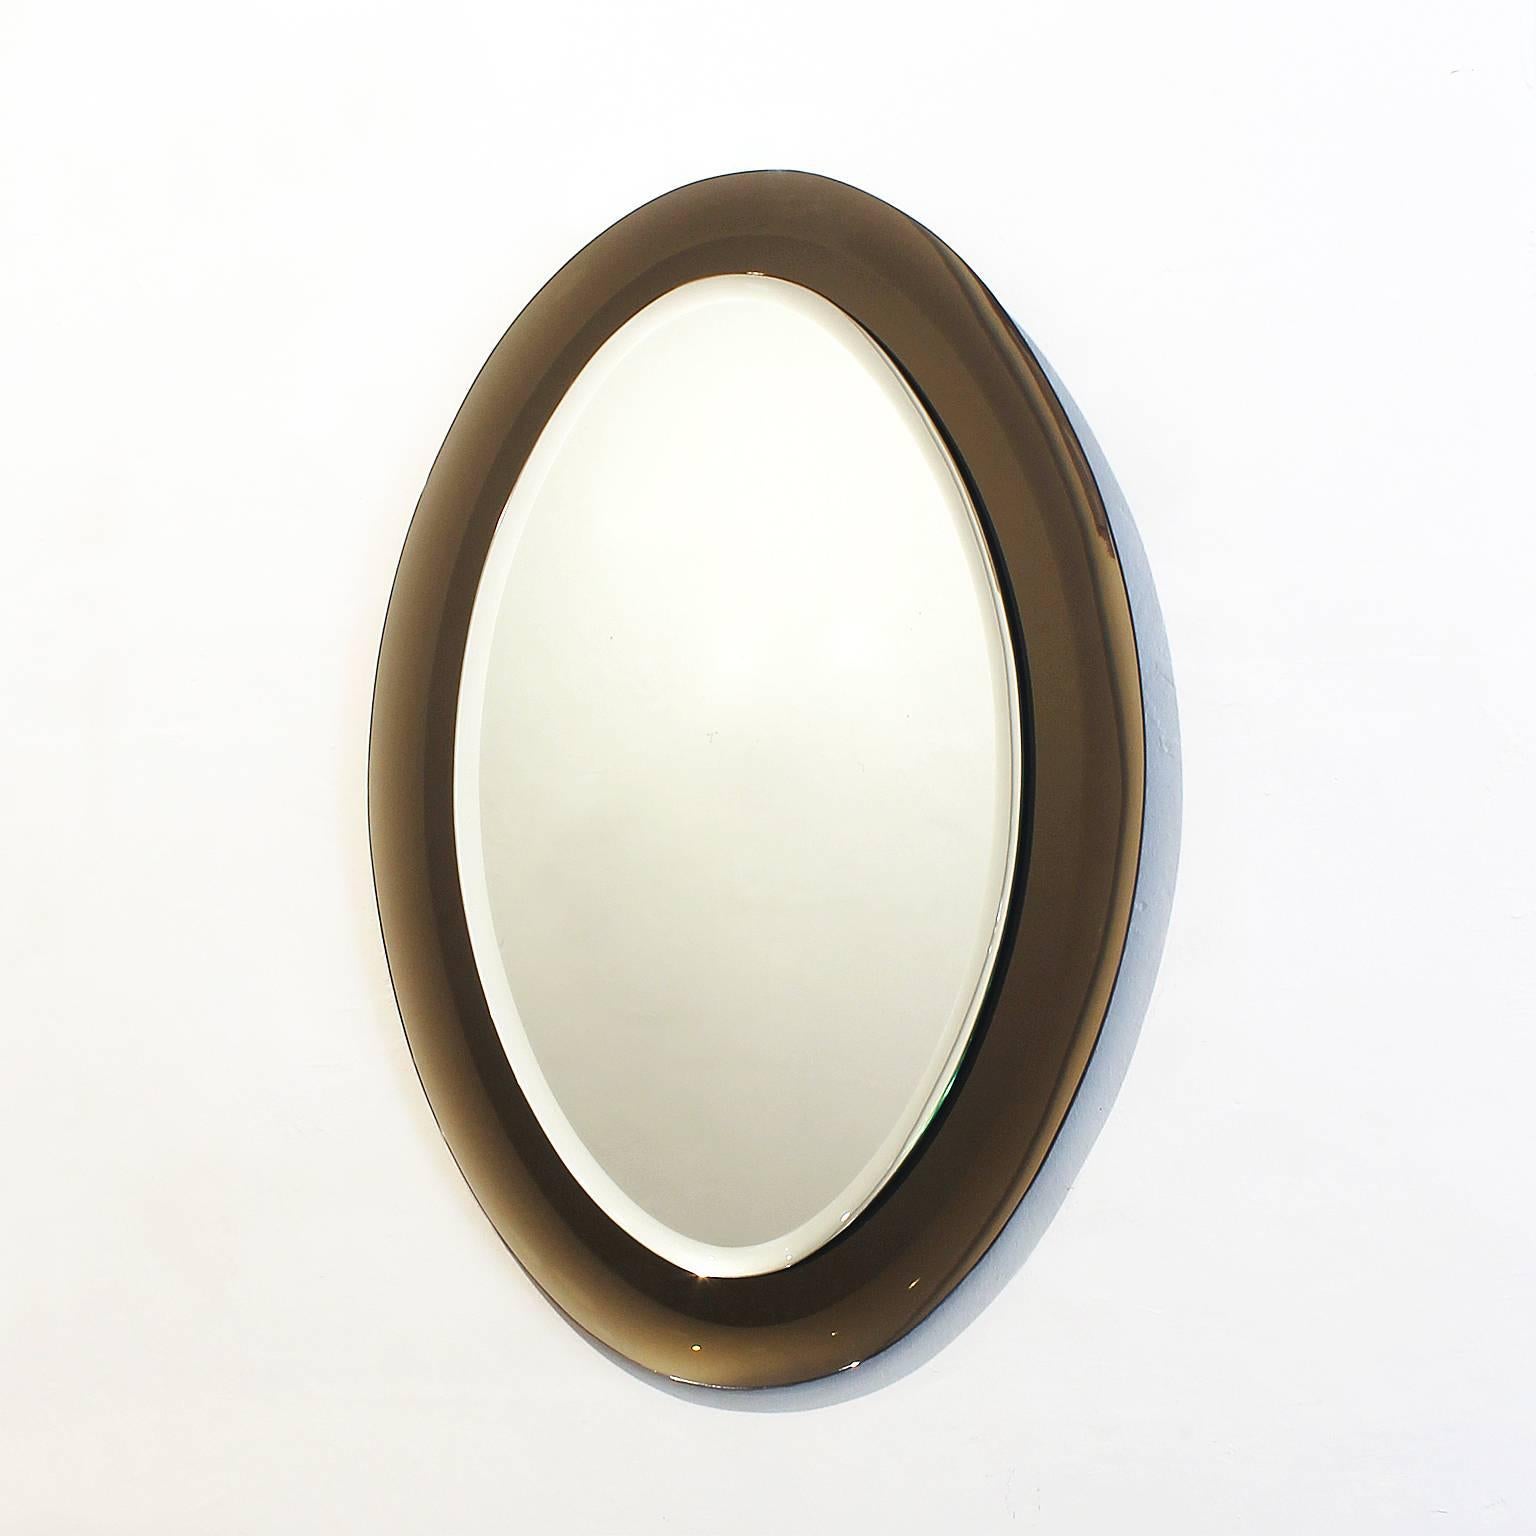 Splendid back beveled oval mirror, with back beveled smoked gray mirror frame,
Italy, circa 1960.